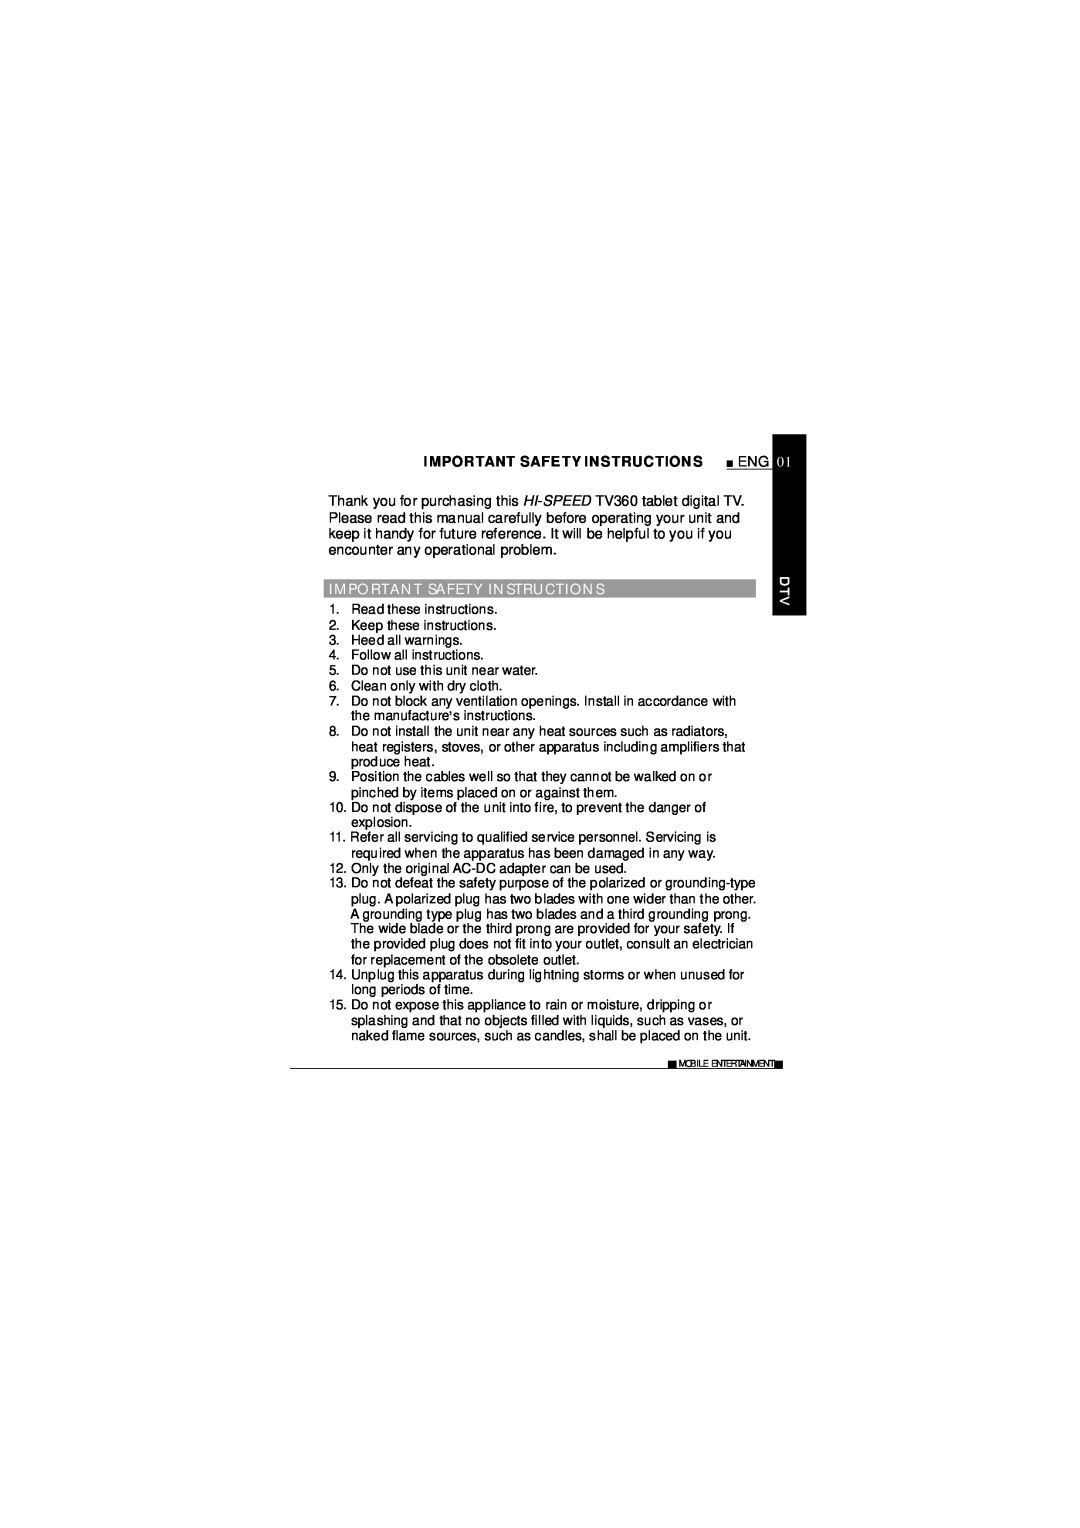 NextBase HI-SPEED TV360 manual Important Safety Instructions 